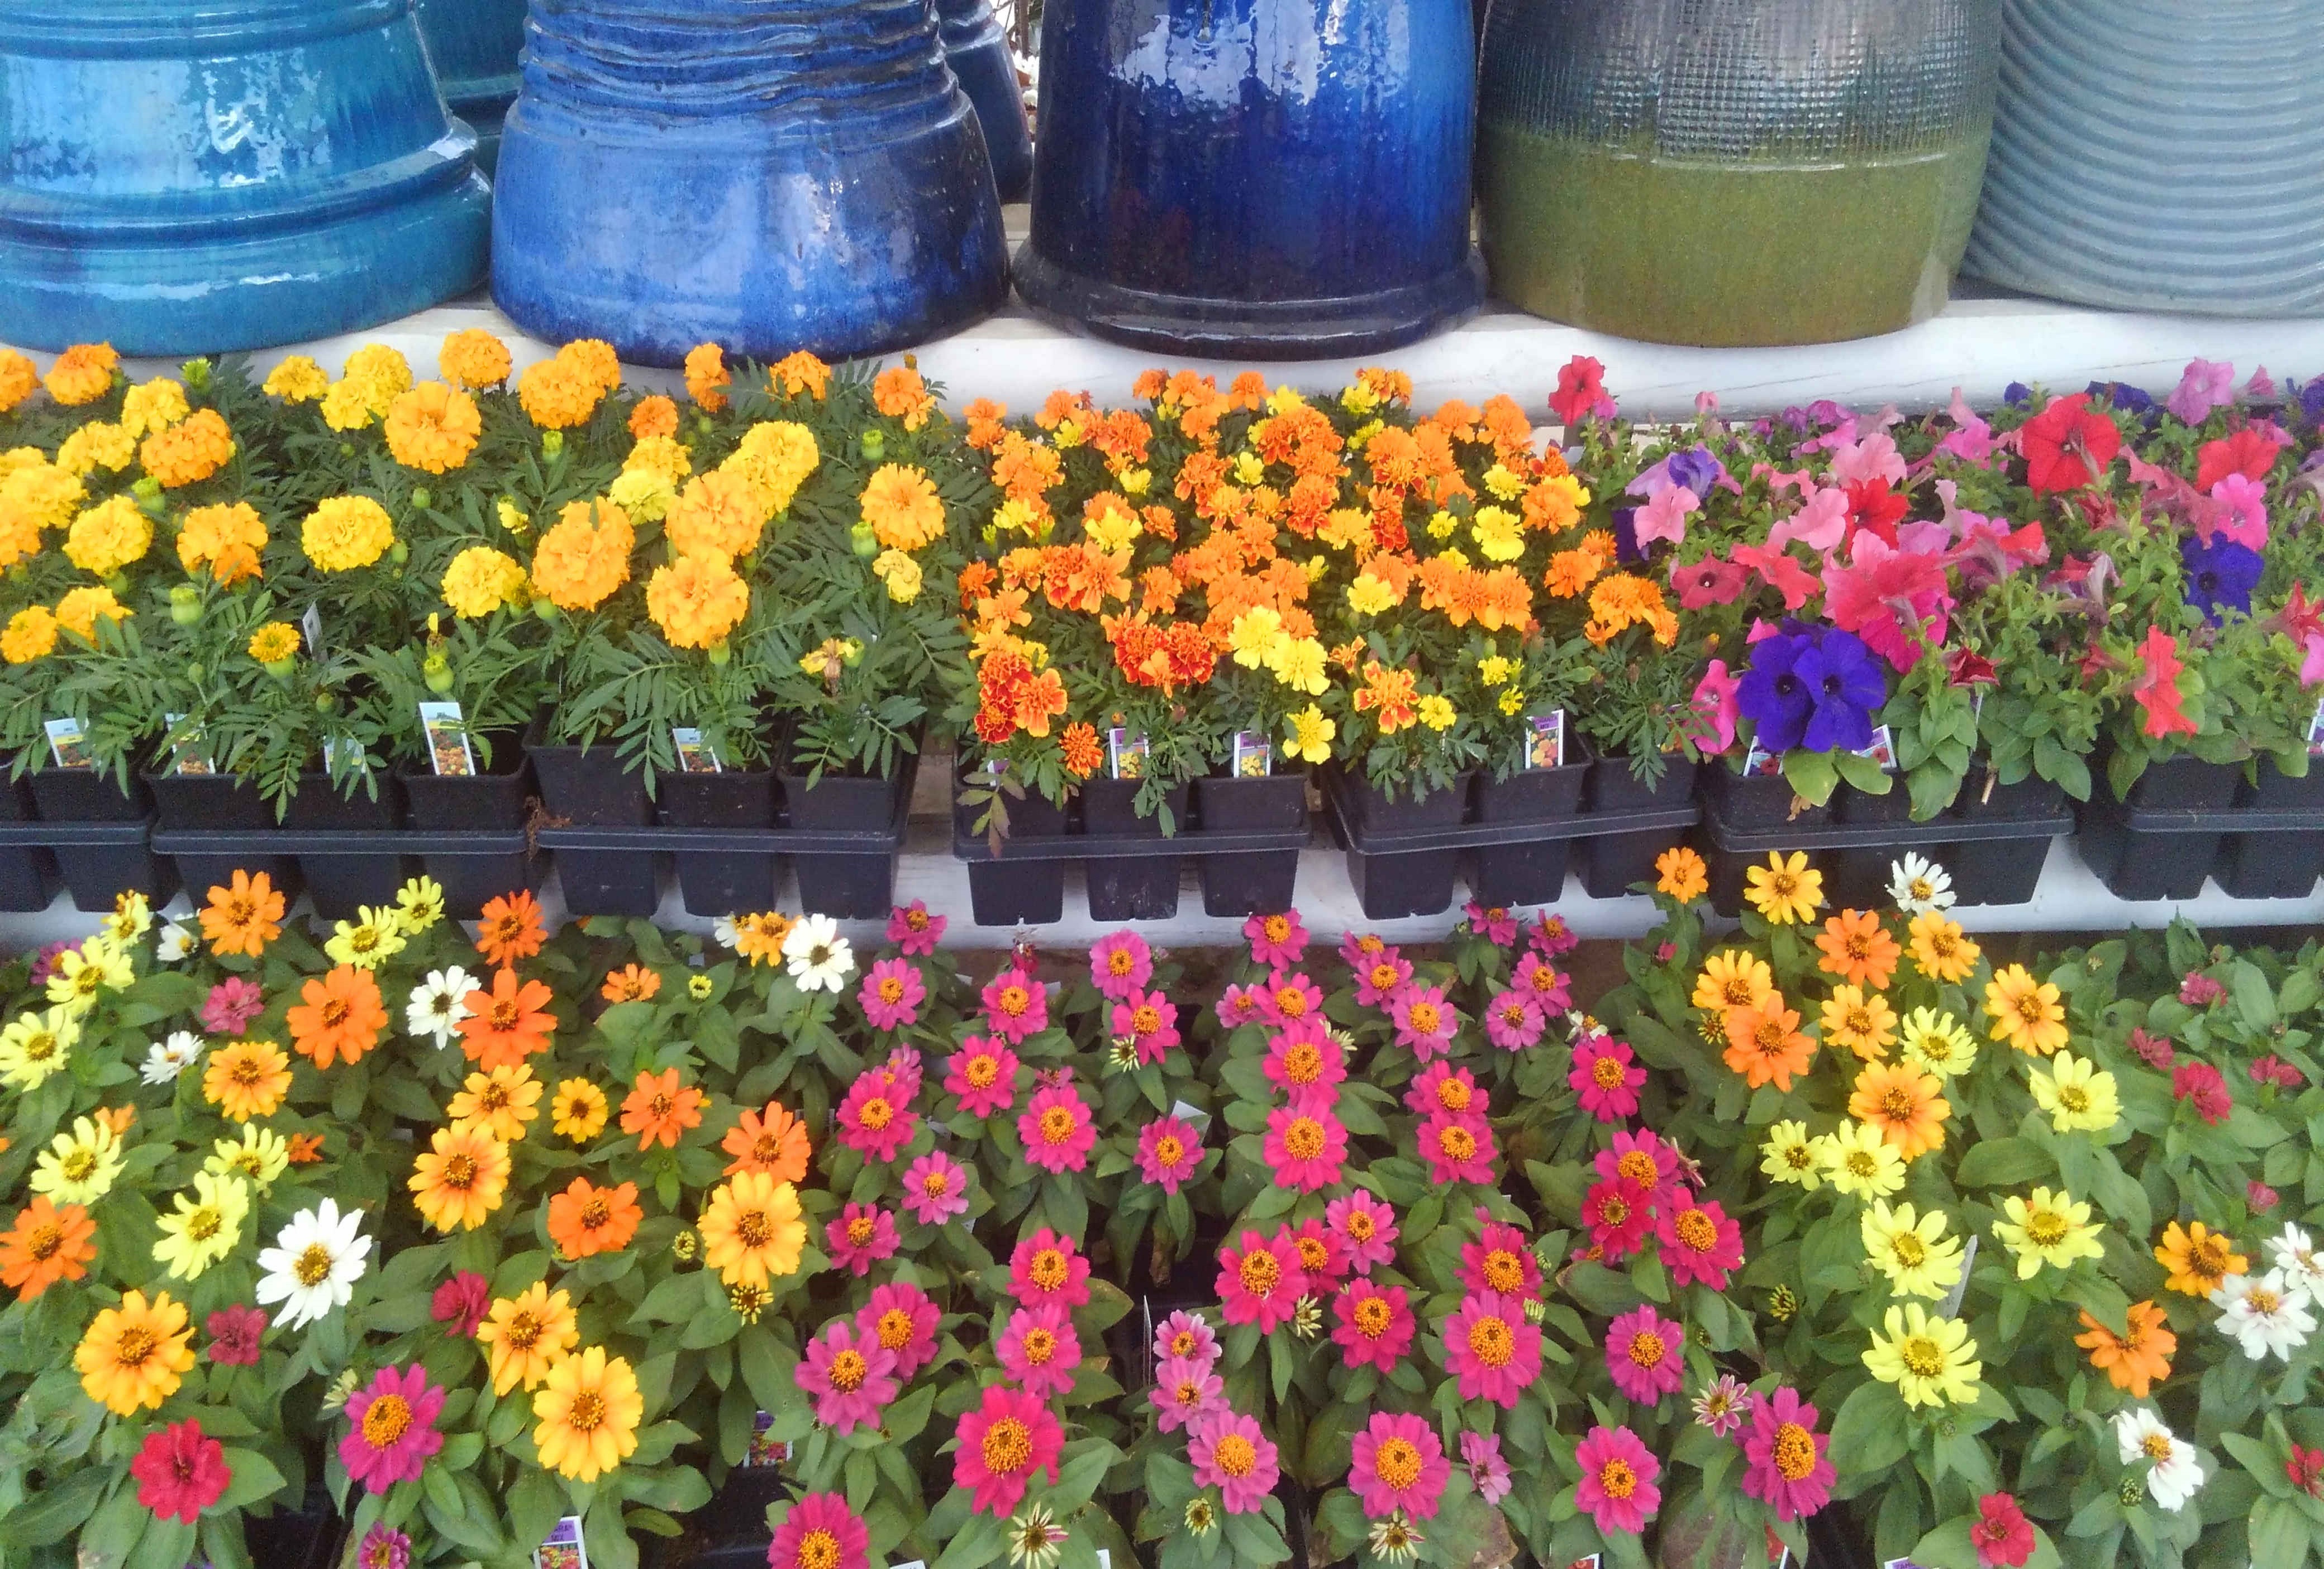 Marigolds and petunias